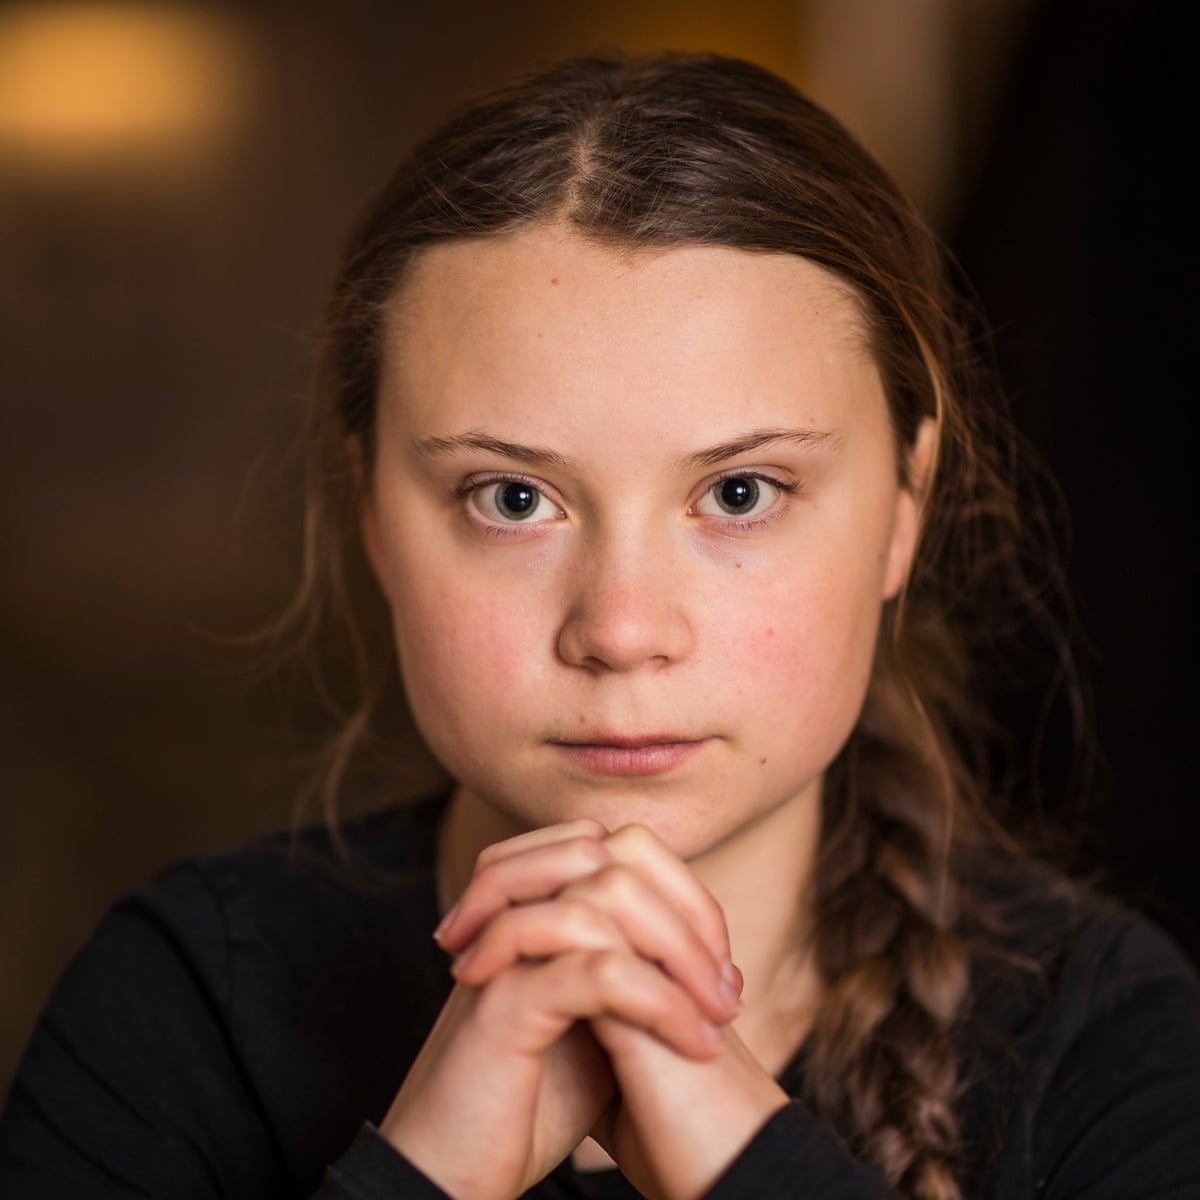 Greta Thunberg has no plans for attending the Glasgow summit